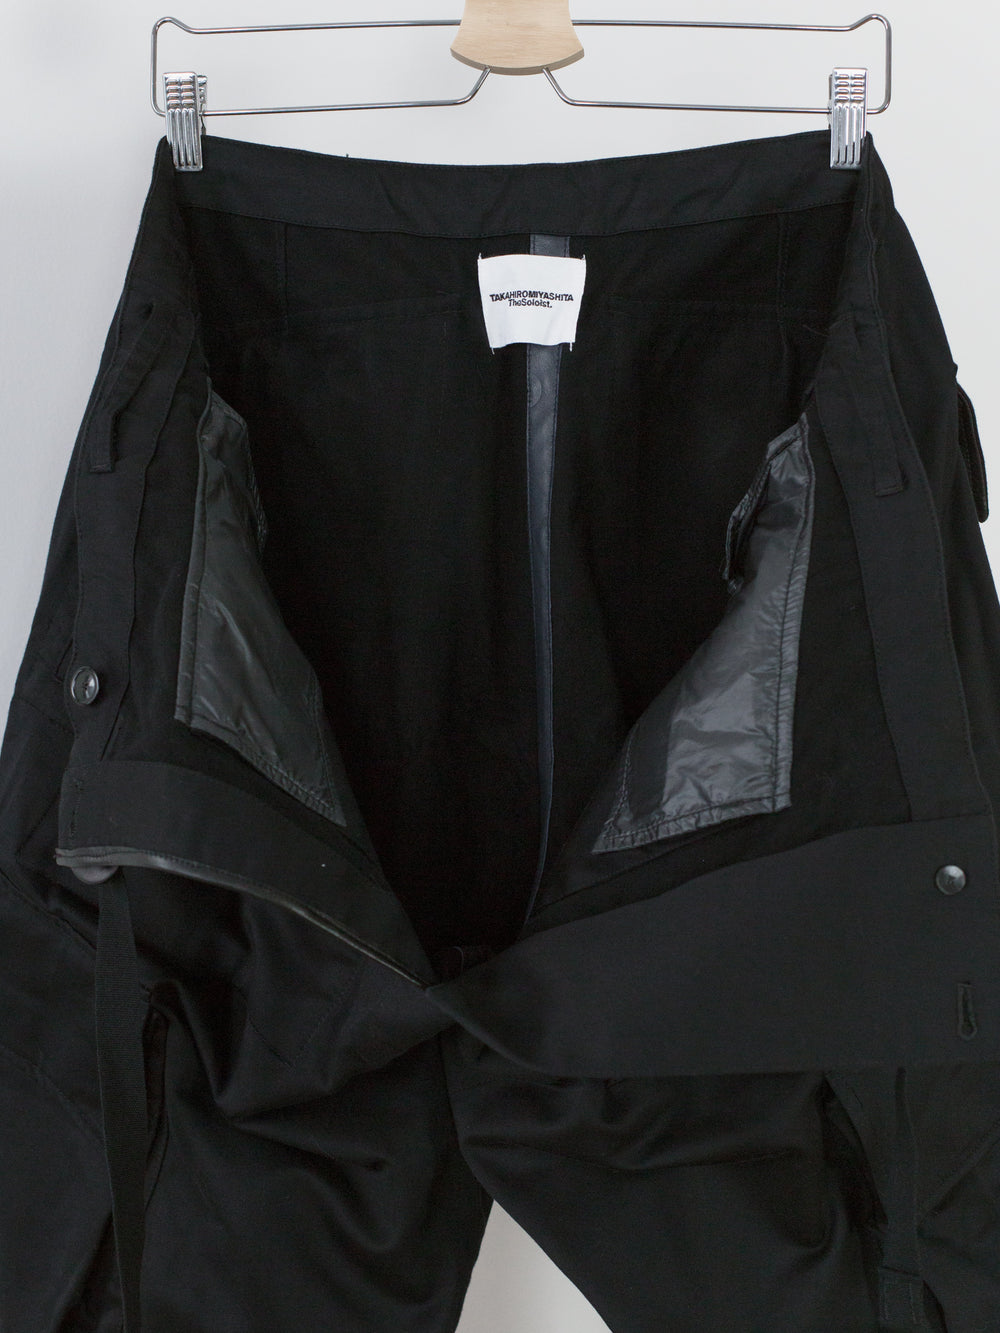 Takahiromiyashita The Soloist AW17 Cotton/Rayon Military Bags